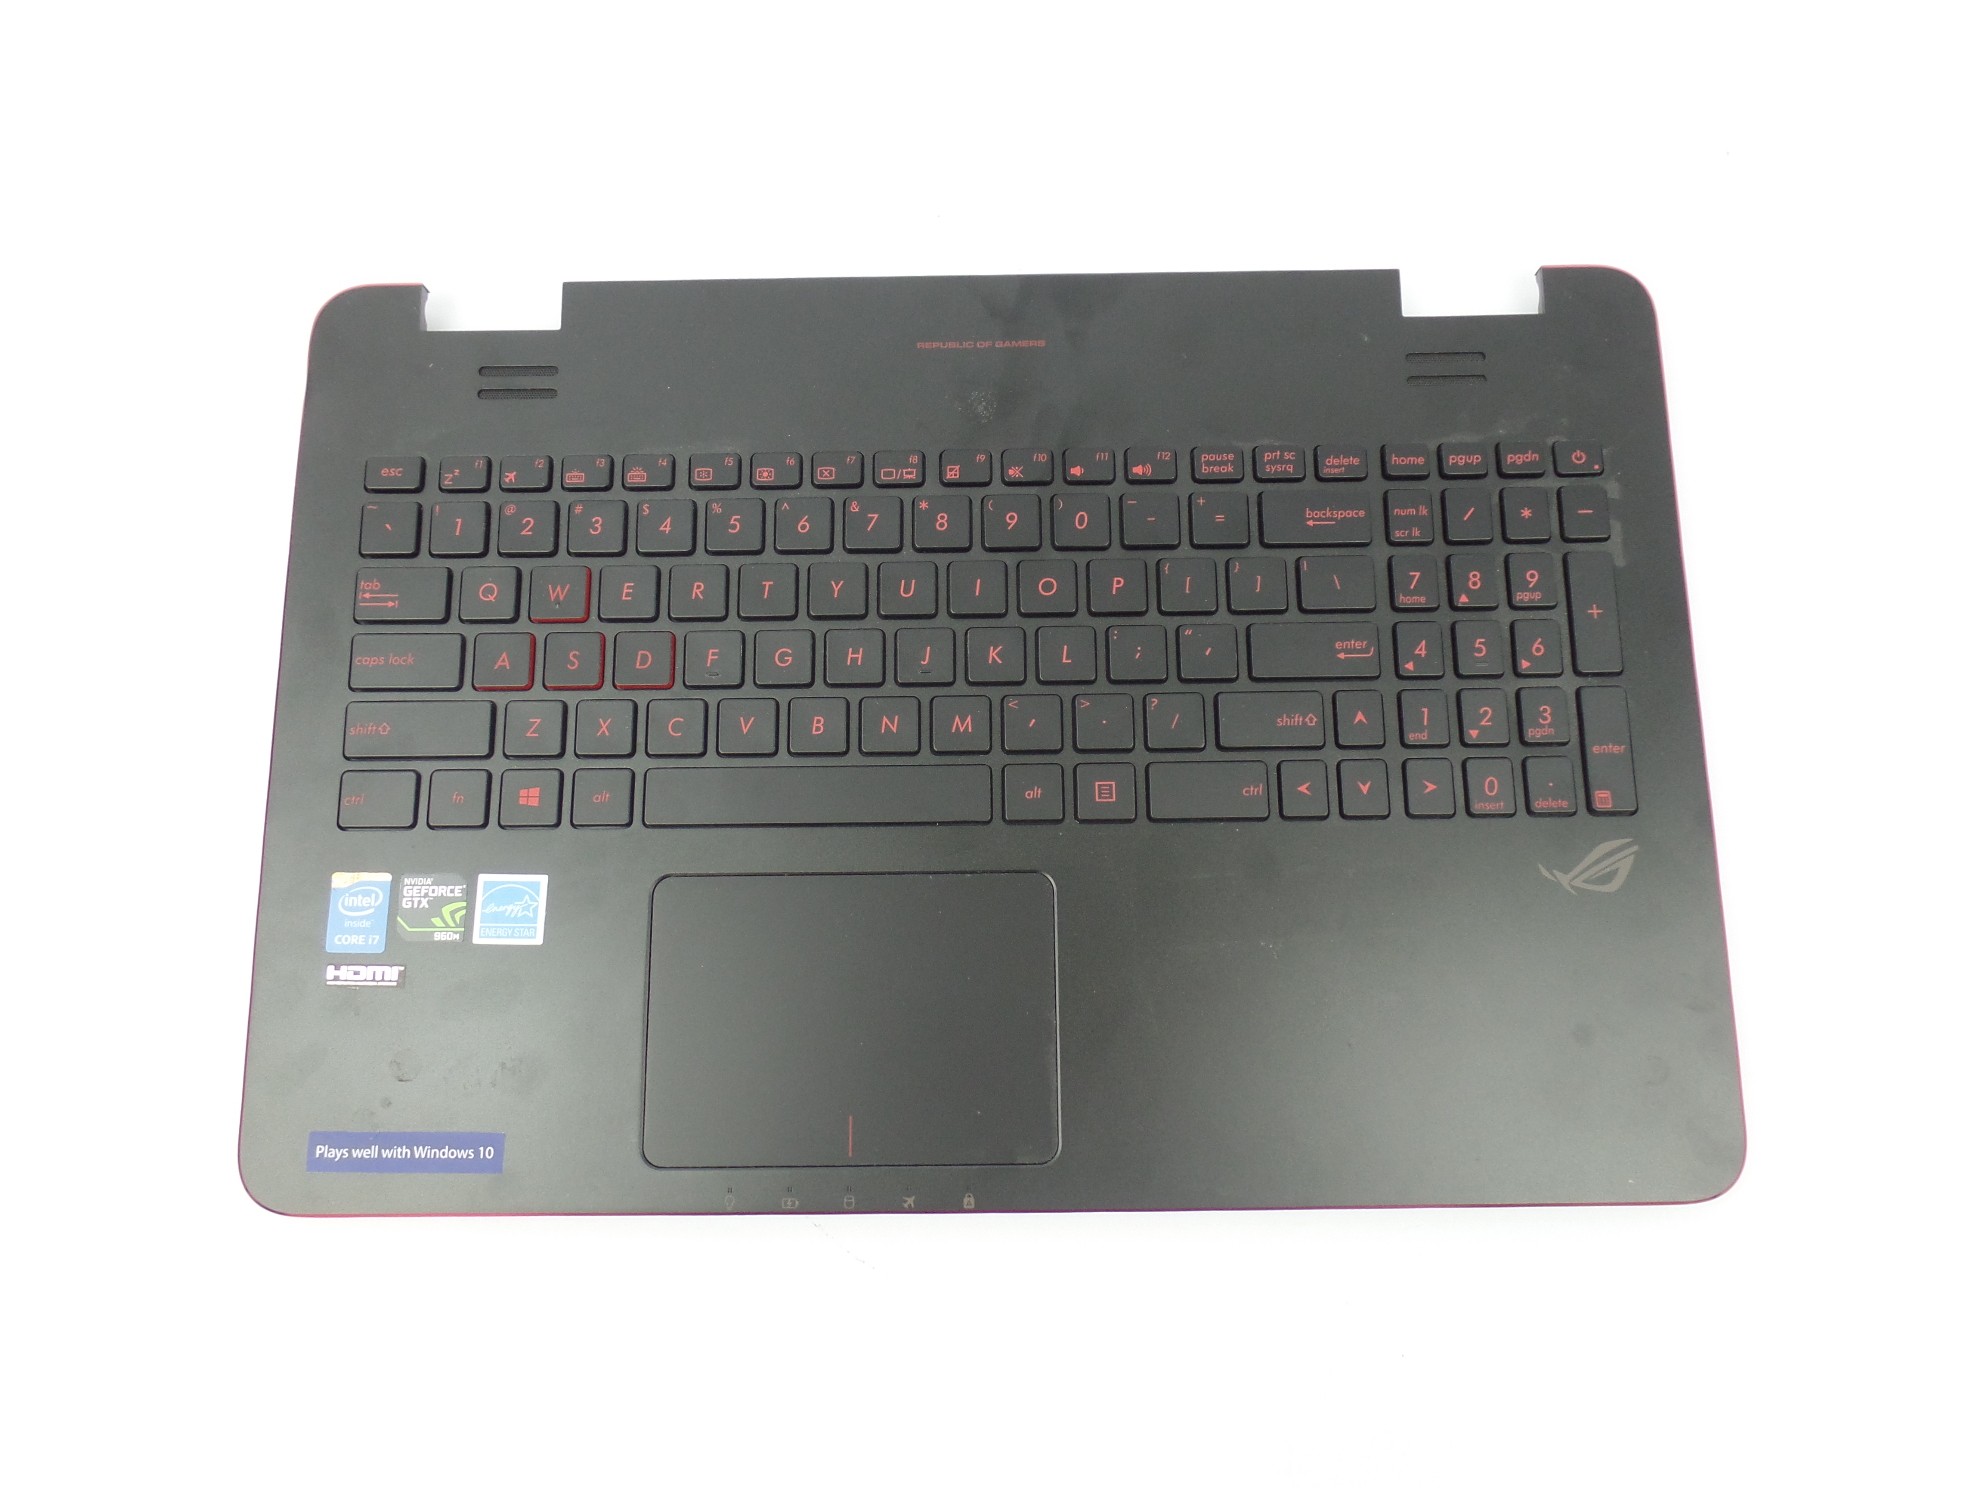 Read: descr. OEM Touchpad Keyboard Palmrest for Asus ROG GL551JW-DS71 